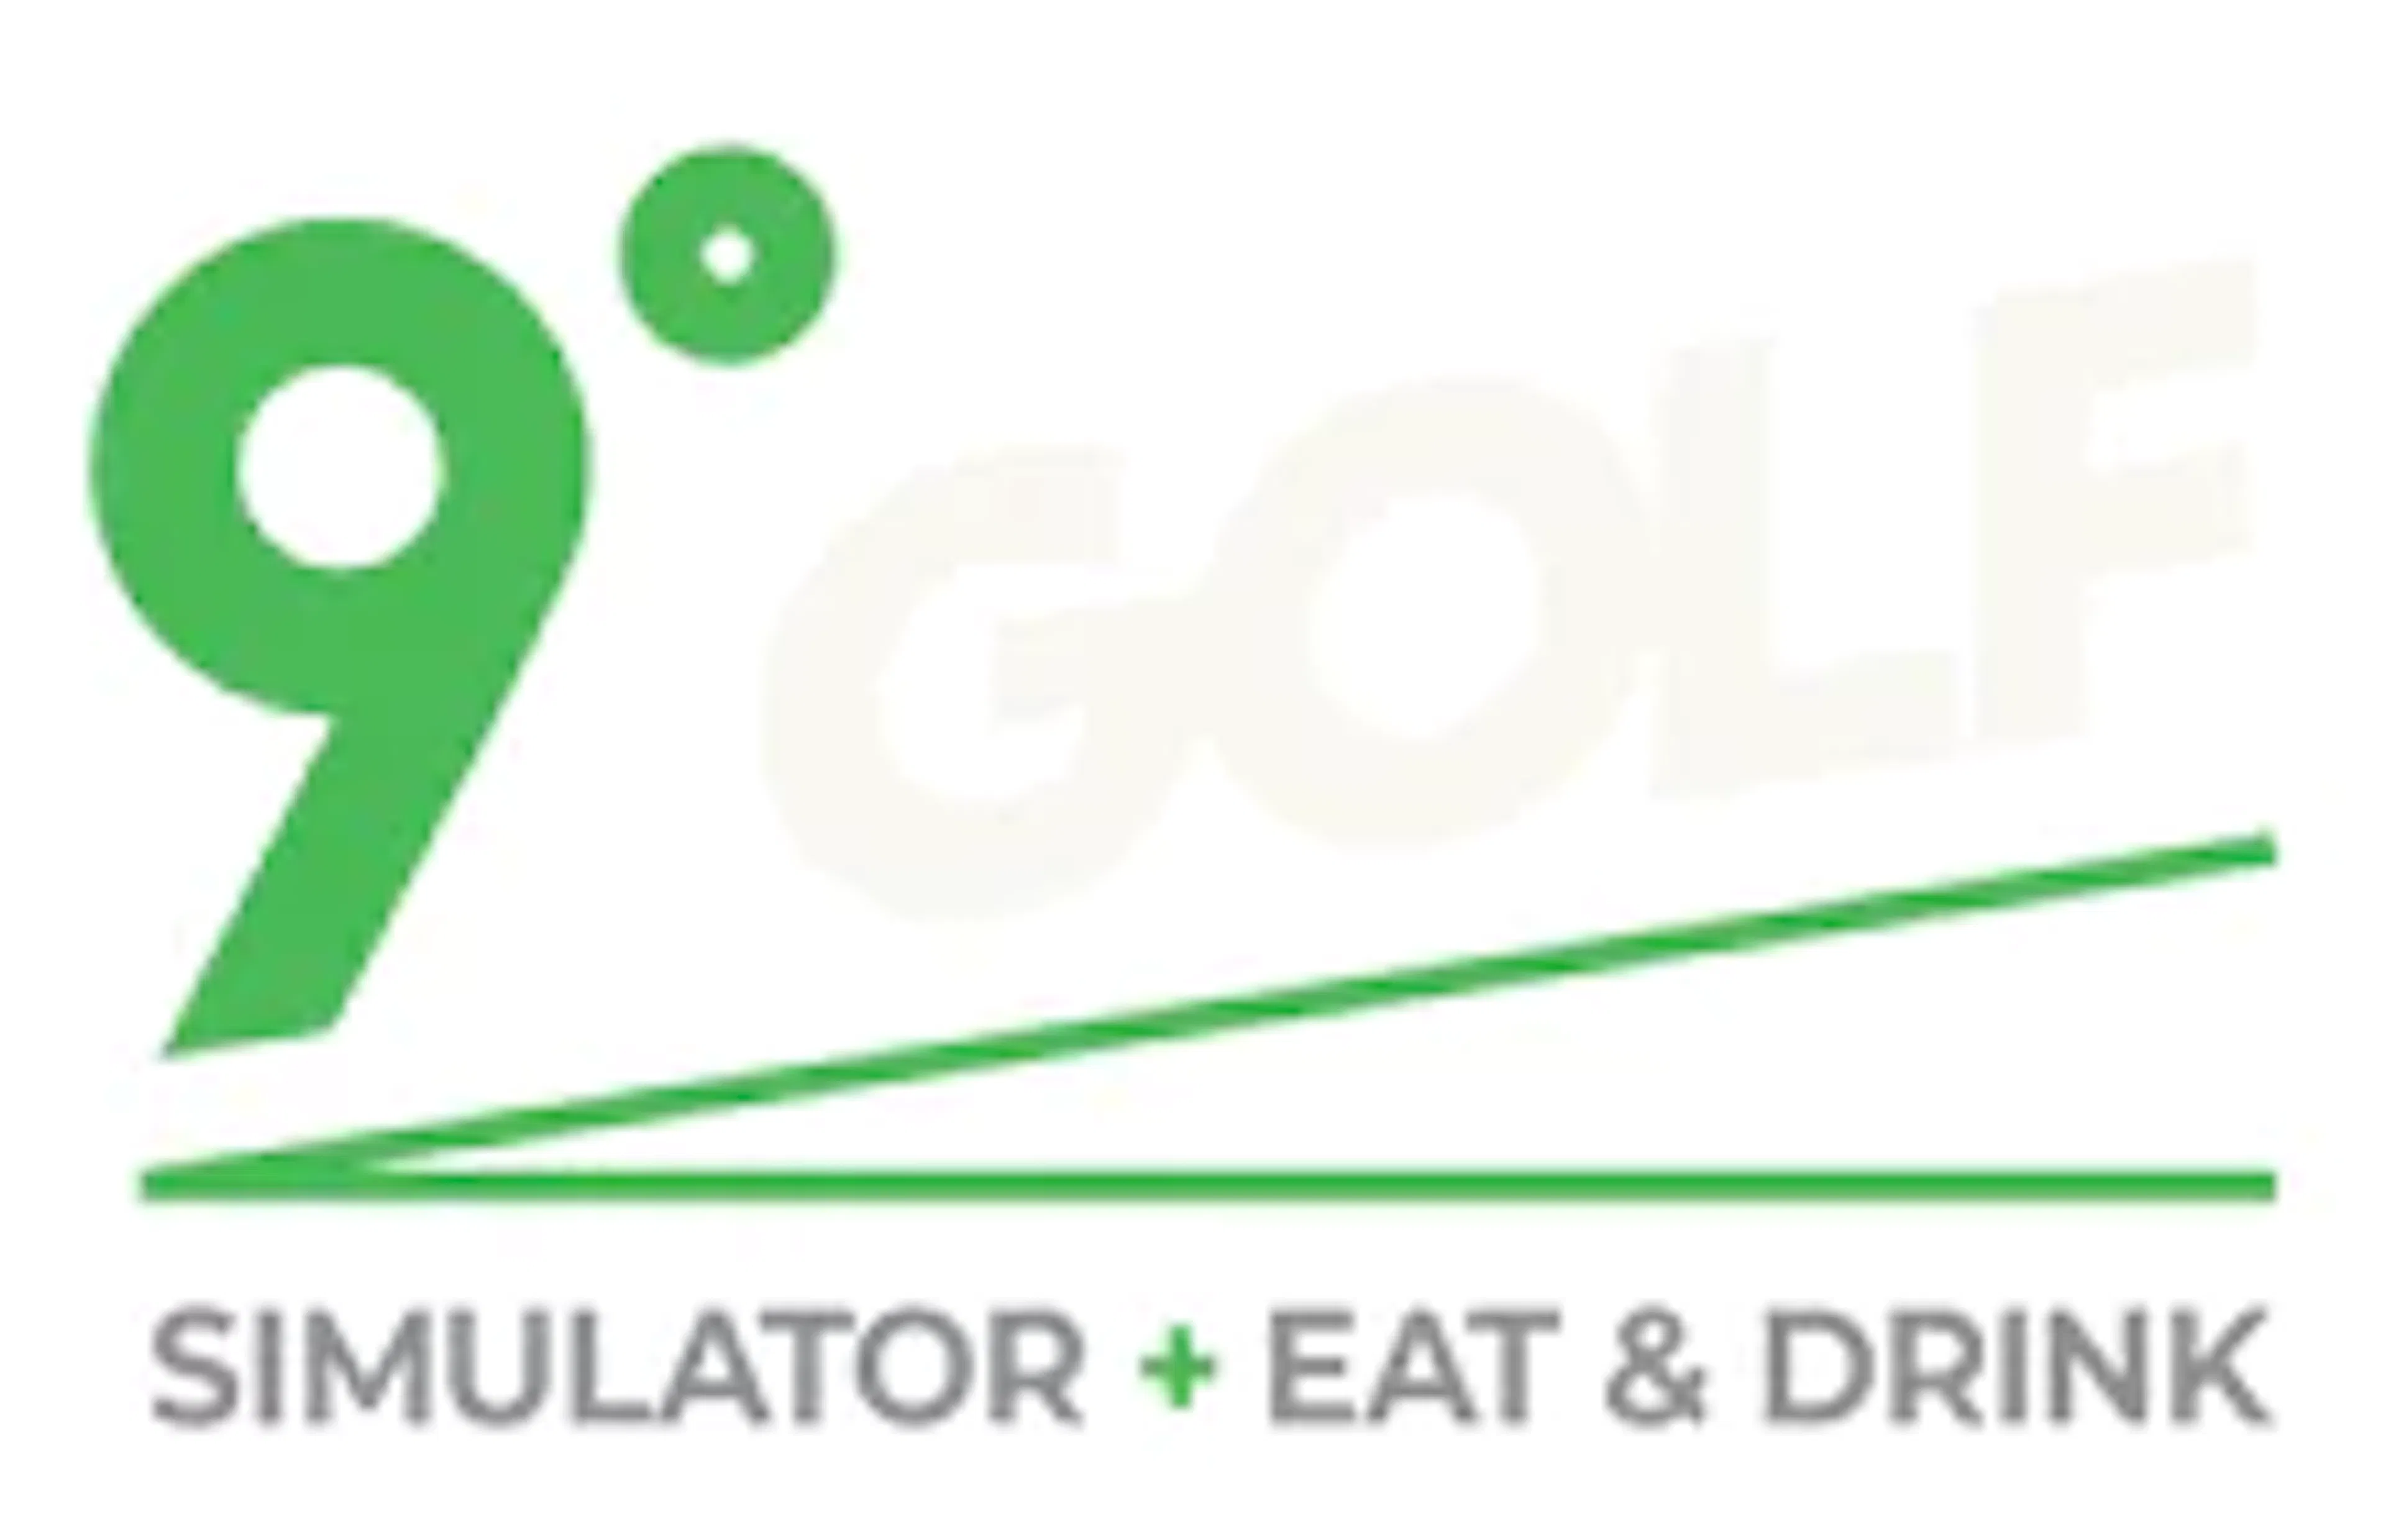 9°(degree) golf - golf simulator, bar & restaurant